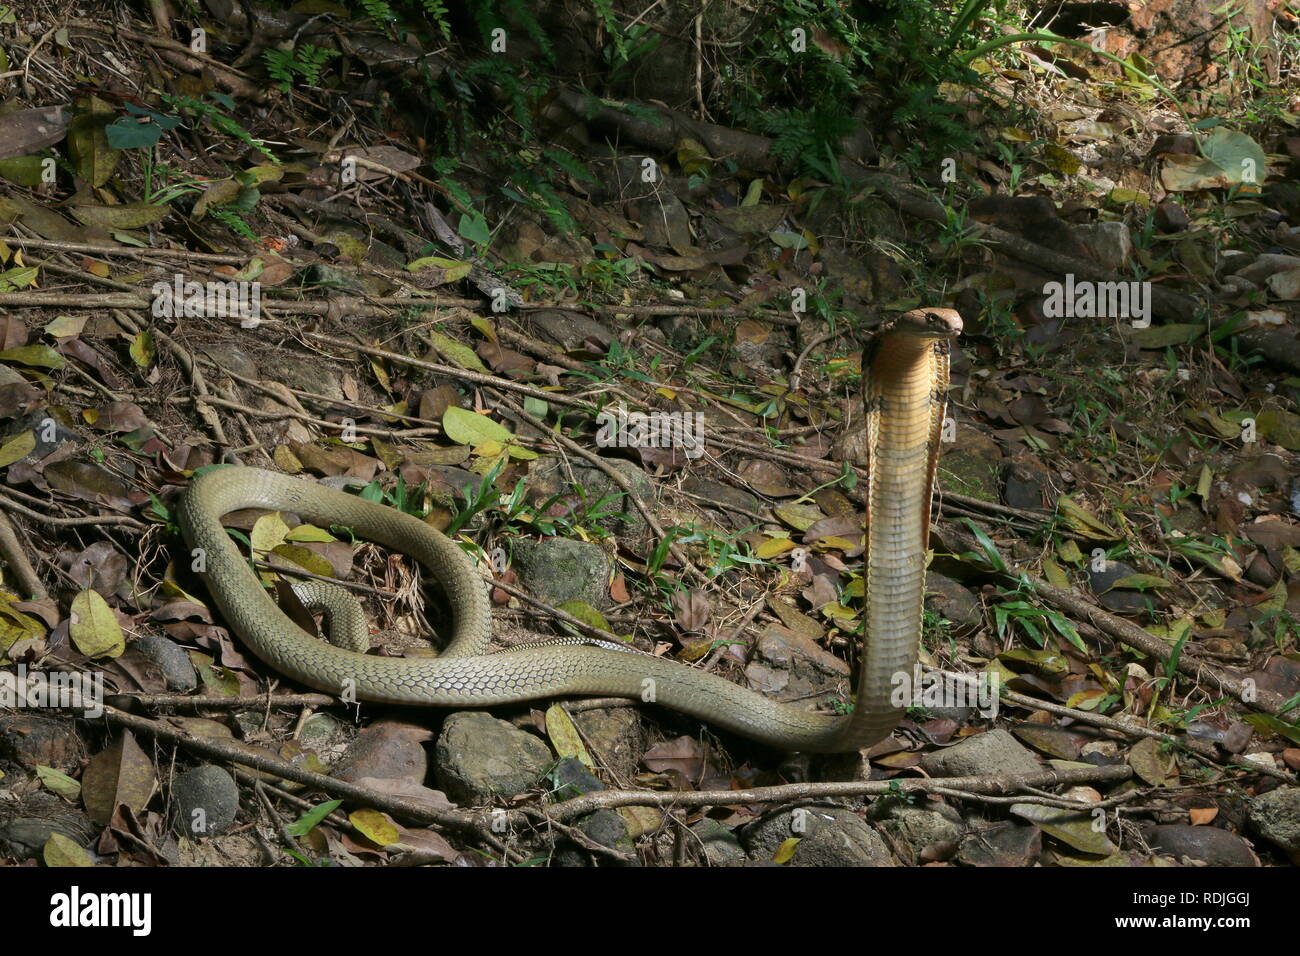 King Cobra (Ophiophagus hannah), es una especie de serpientes venenosas de la familia Elapidae, endémica de los bosques de la India a través del Sudeste de Asia Foto de stock